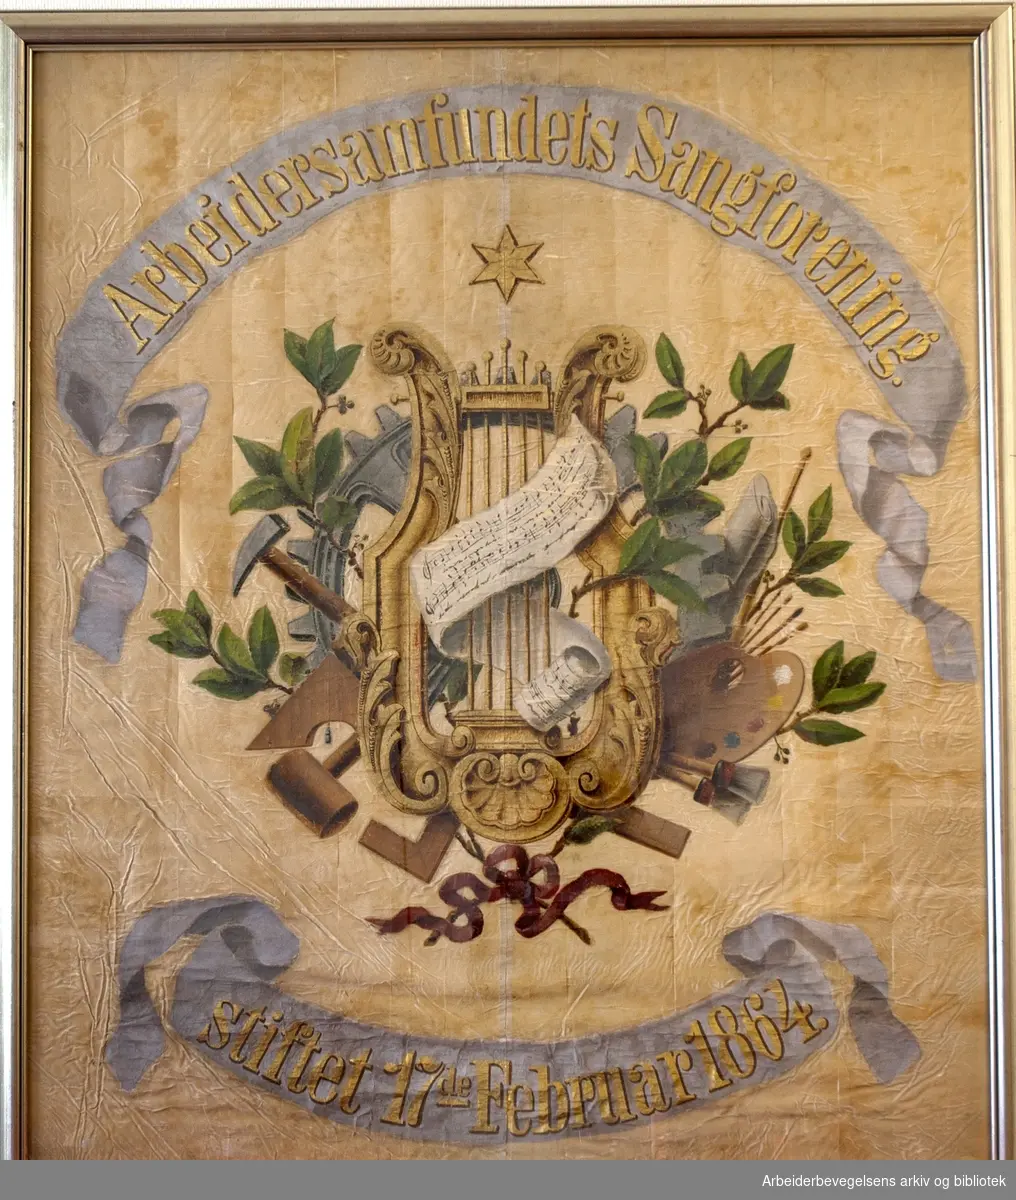 Arbeidersamfundets sangforening.Stiftet 17. februar 1864..Forside..Fanetekst: Arbeidersamfundets Sangforening.Stiftet 17. februar 1864